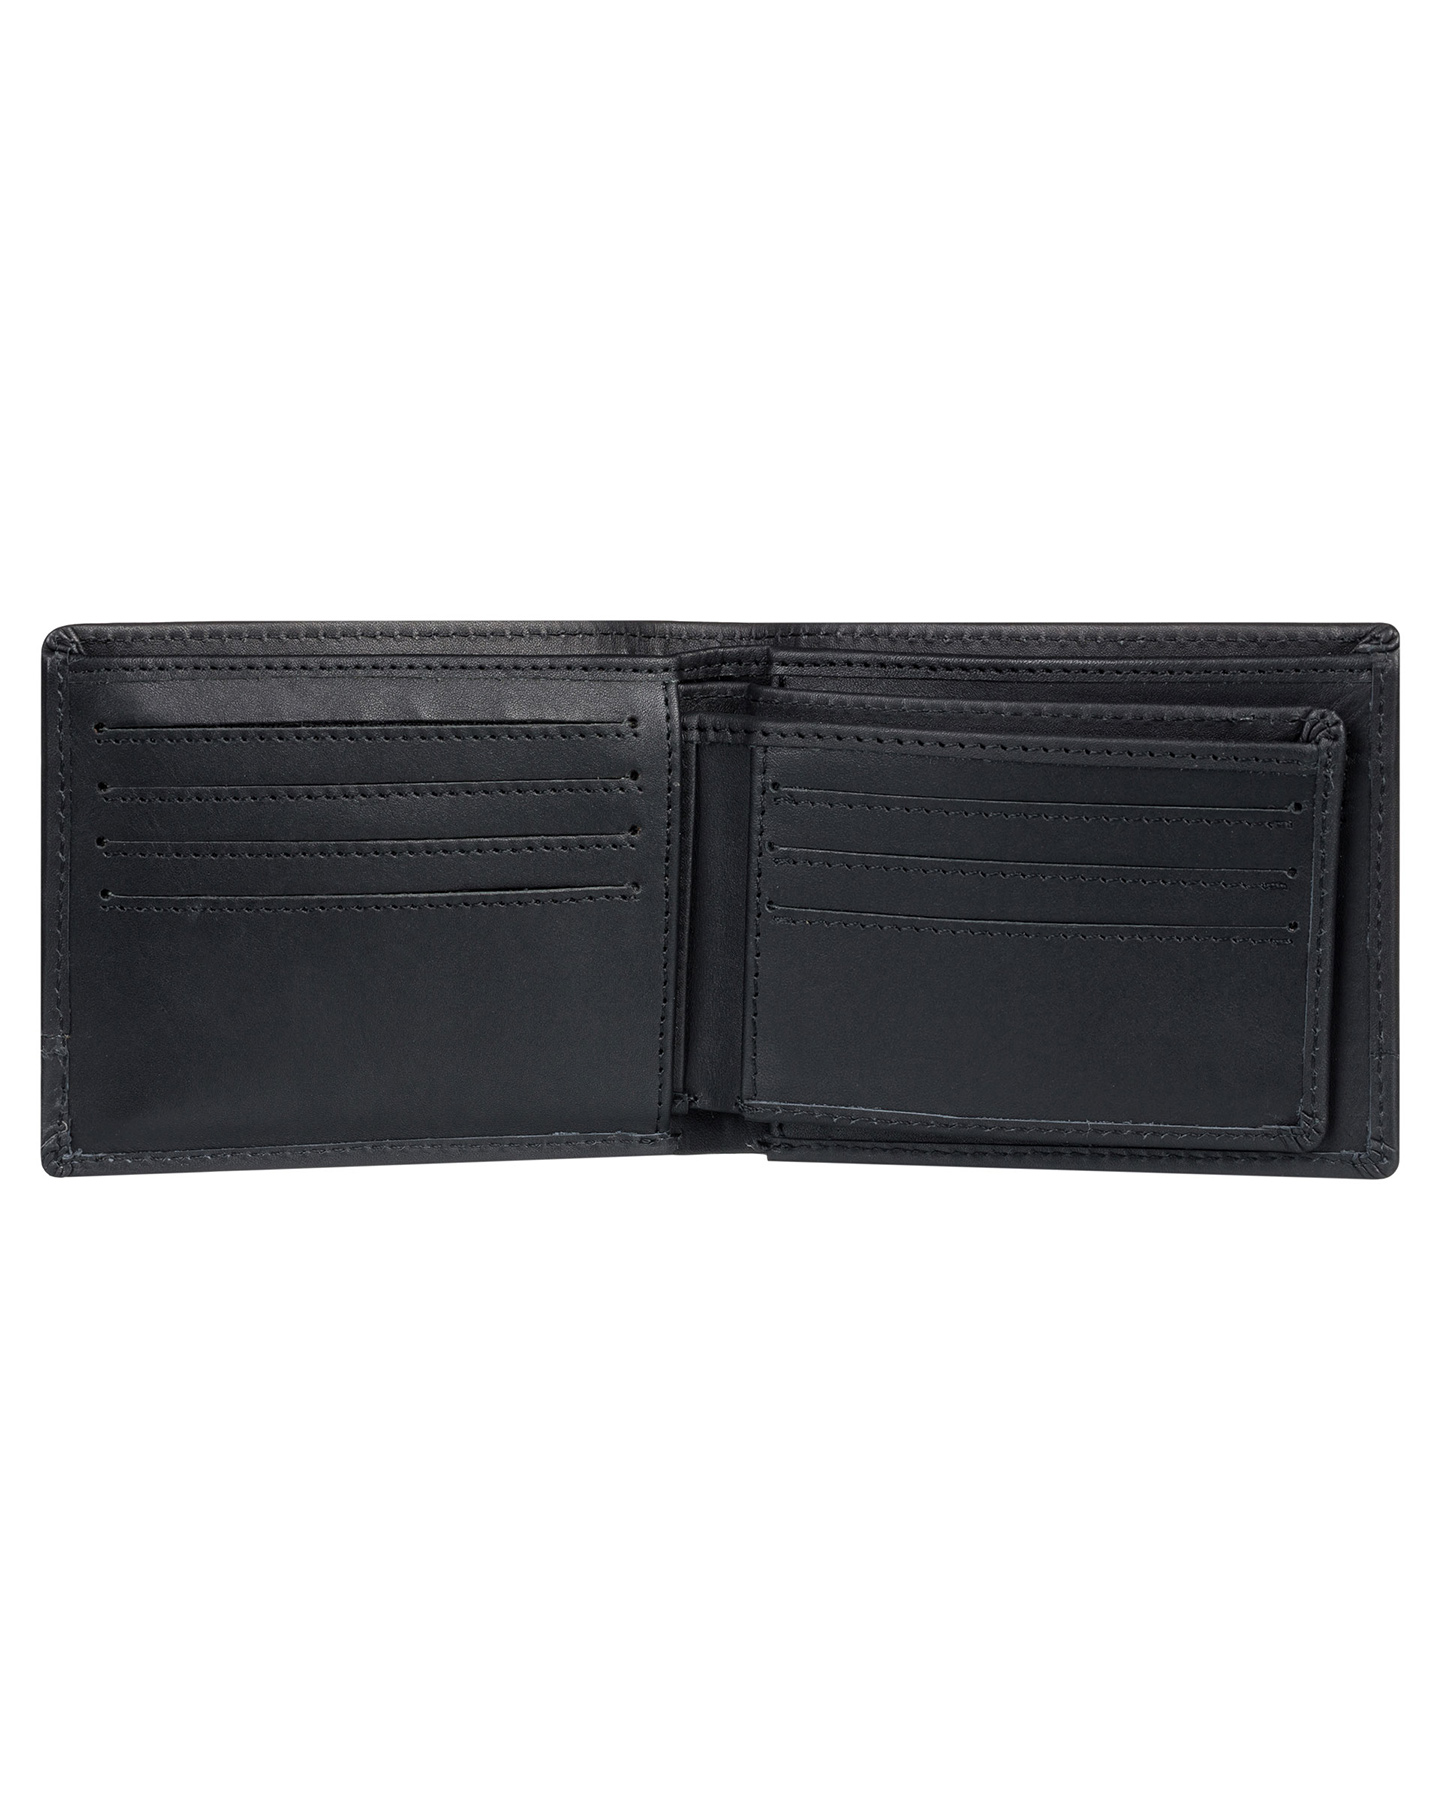 Quiksilver Mens Pathway Bi Fold Leather Wallet - Black | SurfStitch